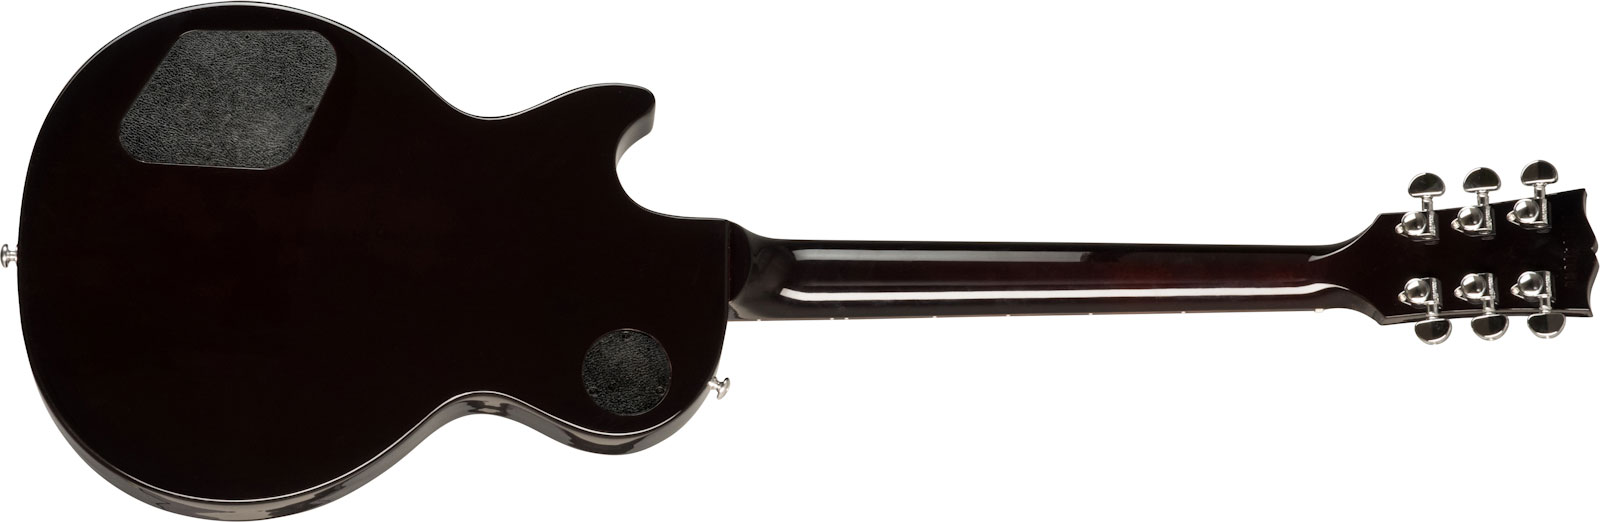 Gibson Les Paul Studio Modern 2h Ht Rw - Smokehouse Burst - Guitarra eléctrica de corte único. - Variation 1